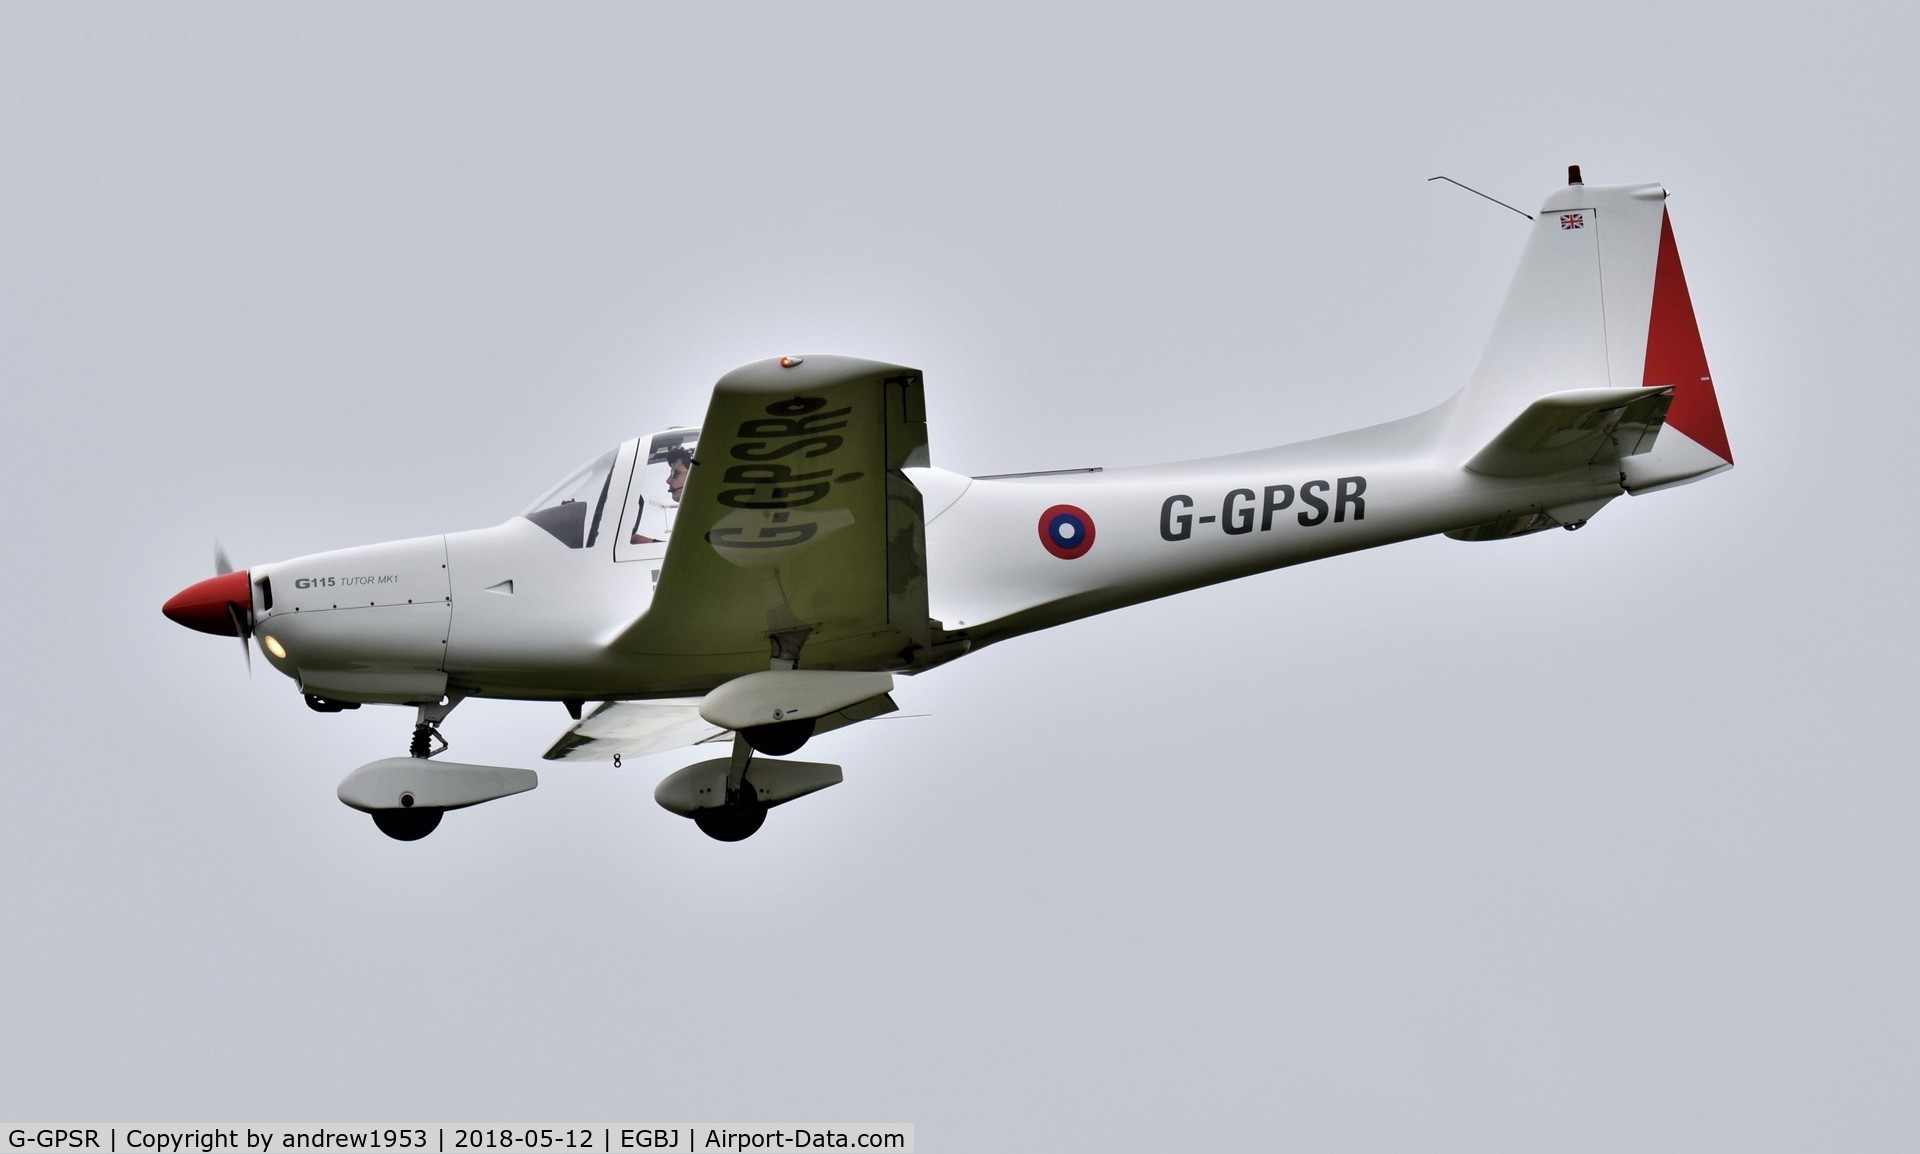 G-GPSR, 1988 Grob G-115 C/N 8024, G-GPSR at Gloucestershire Airport.